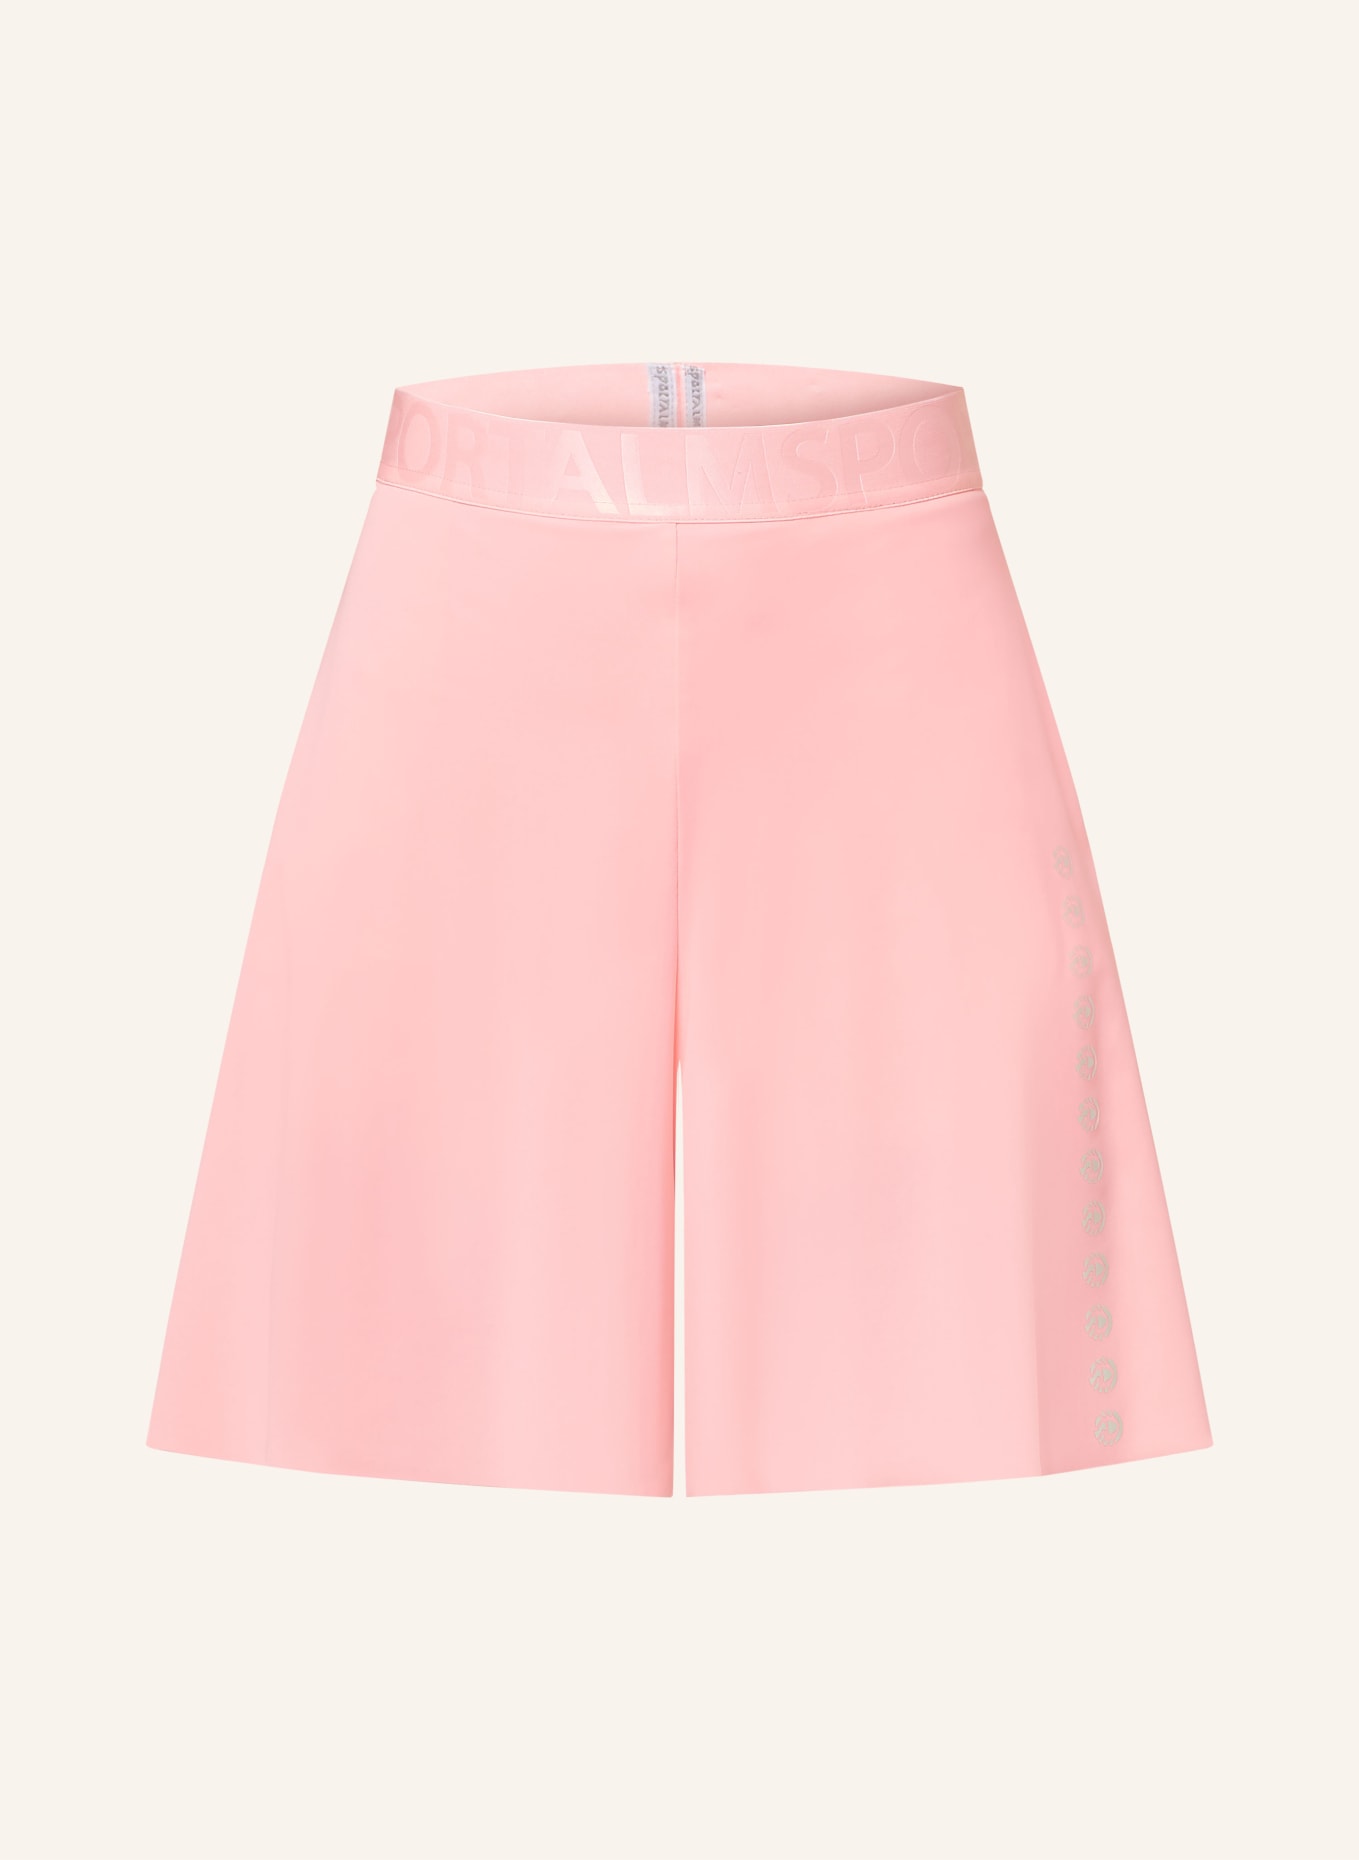 ULLI EHRLICH SPORTALM Shorts, Farbe: ROSA (Bild 1)